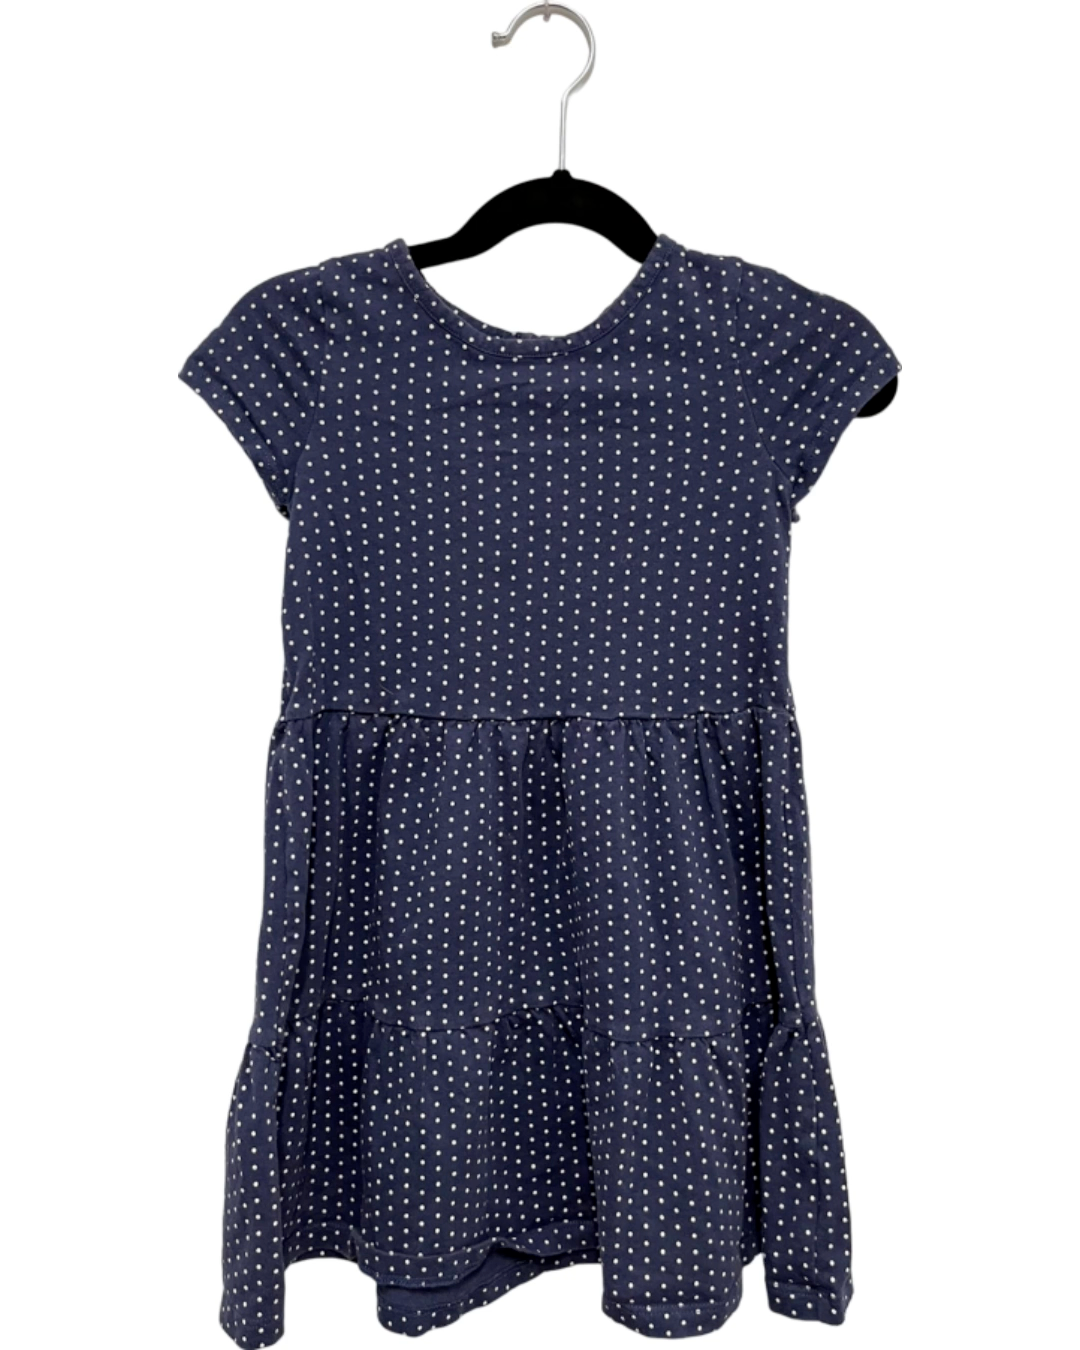 Baby GAP Blue Polkadot Dress (5T)